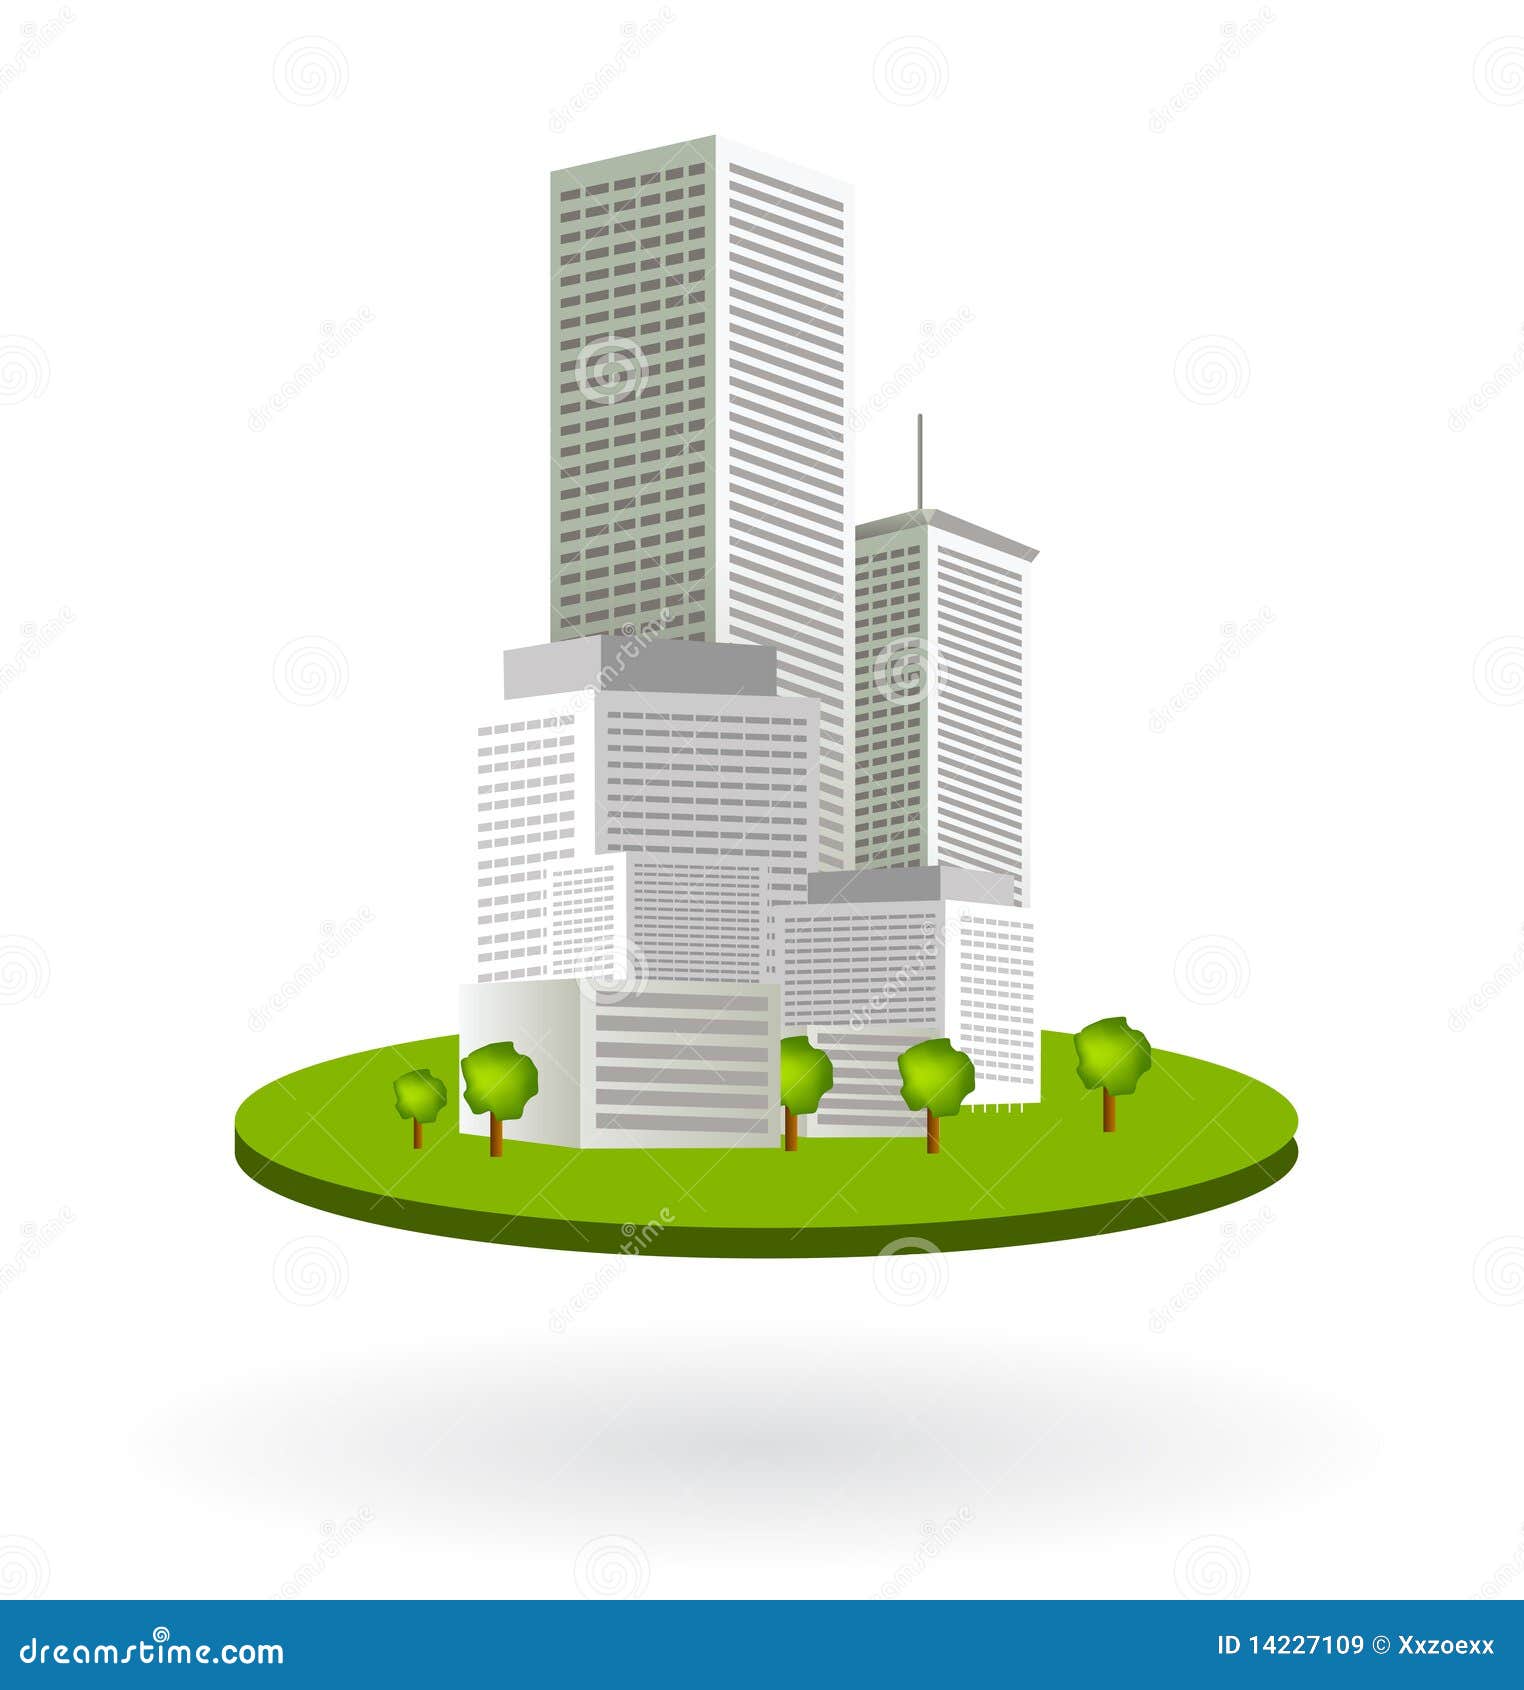 Downtown skyscrapers stock vector. Illustration of metropolis - 14227109